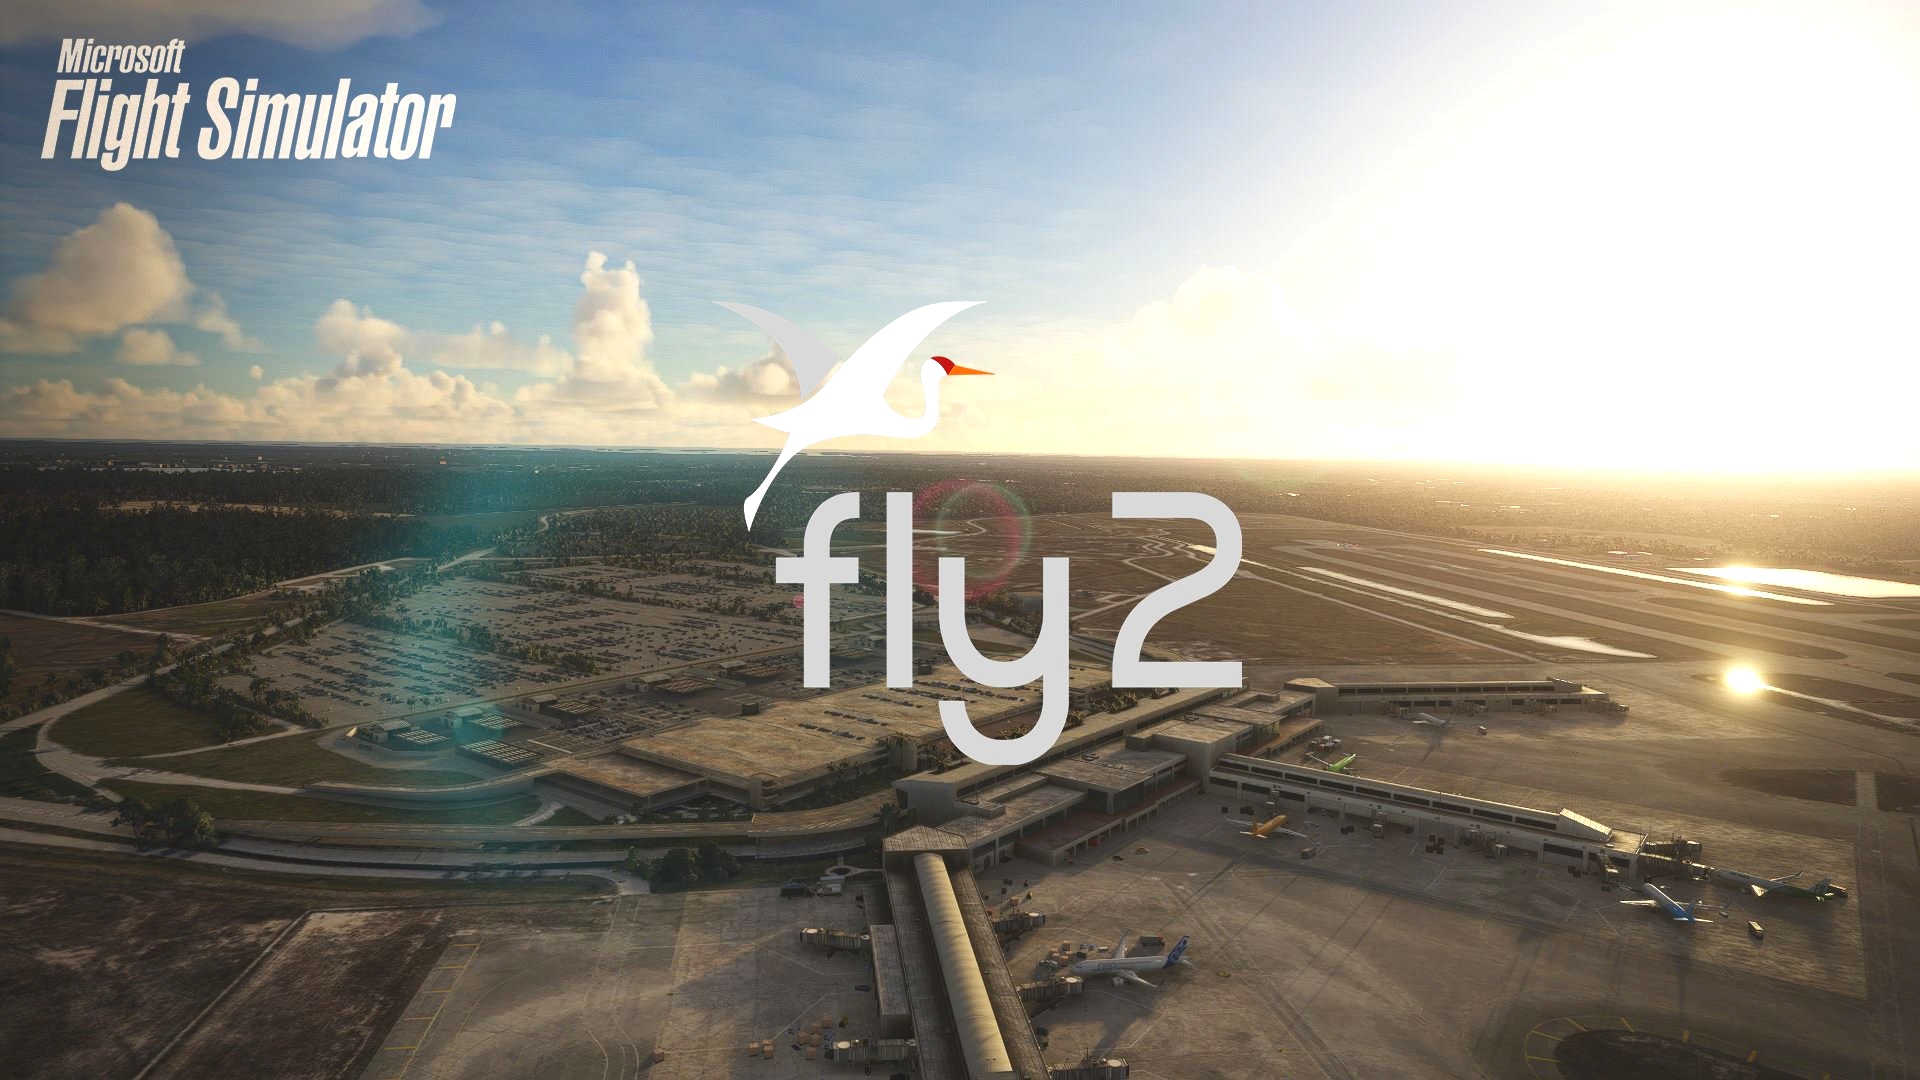 KRSW - Southwest Florida International Airport Microsoft Flight Simulator